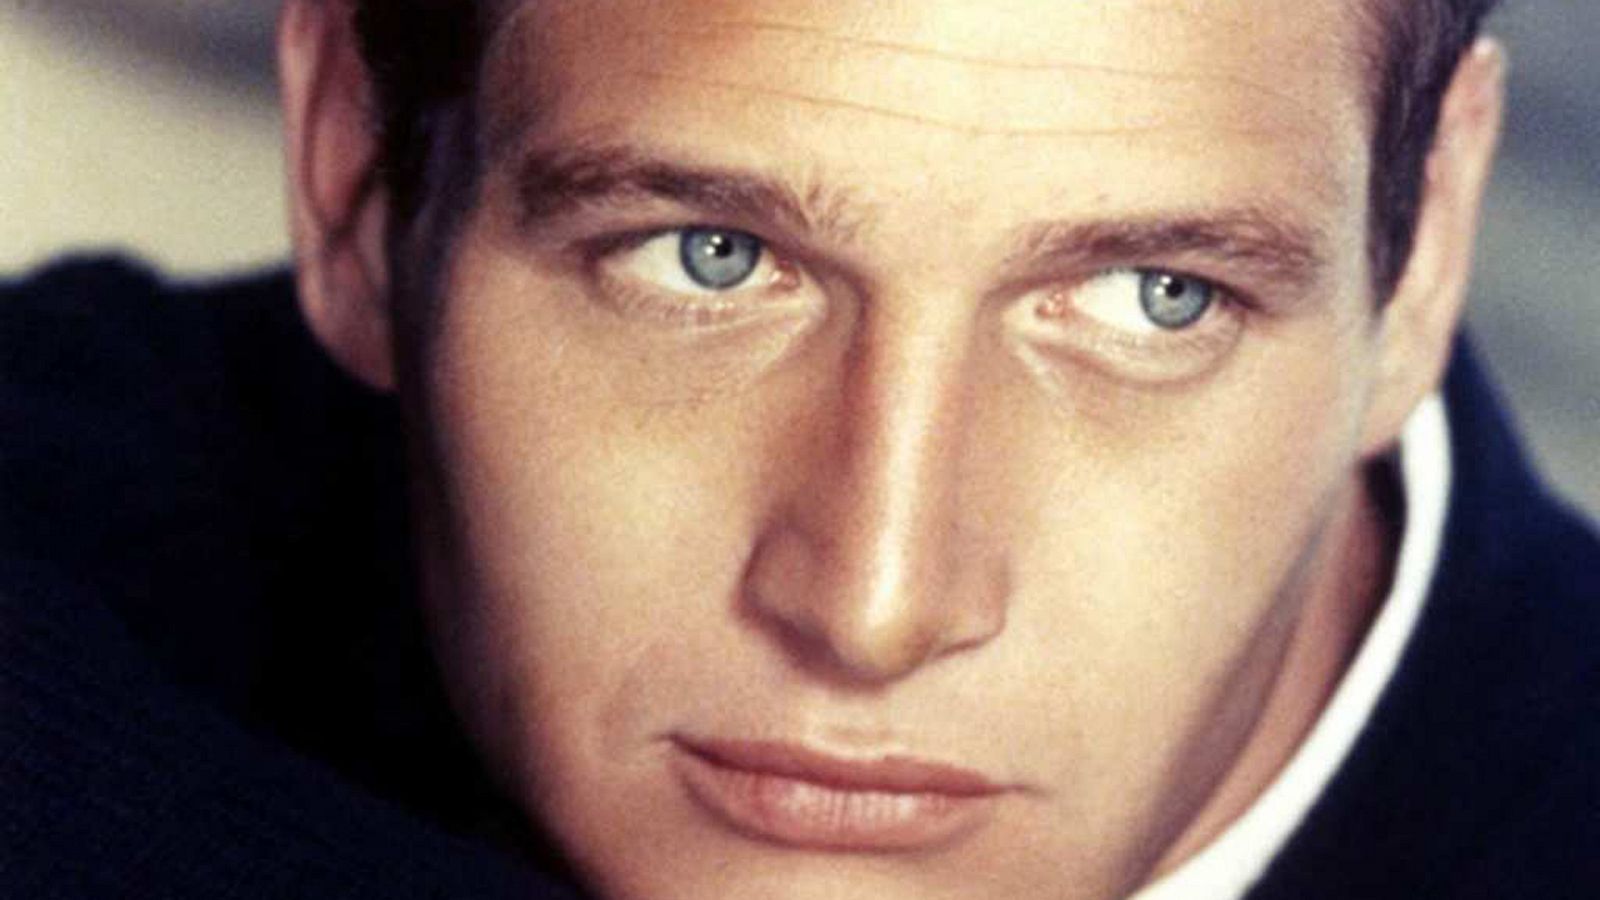 Paul Newman, detrás de los ojos azules - Documaster - Documental en RTVE